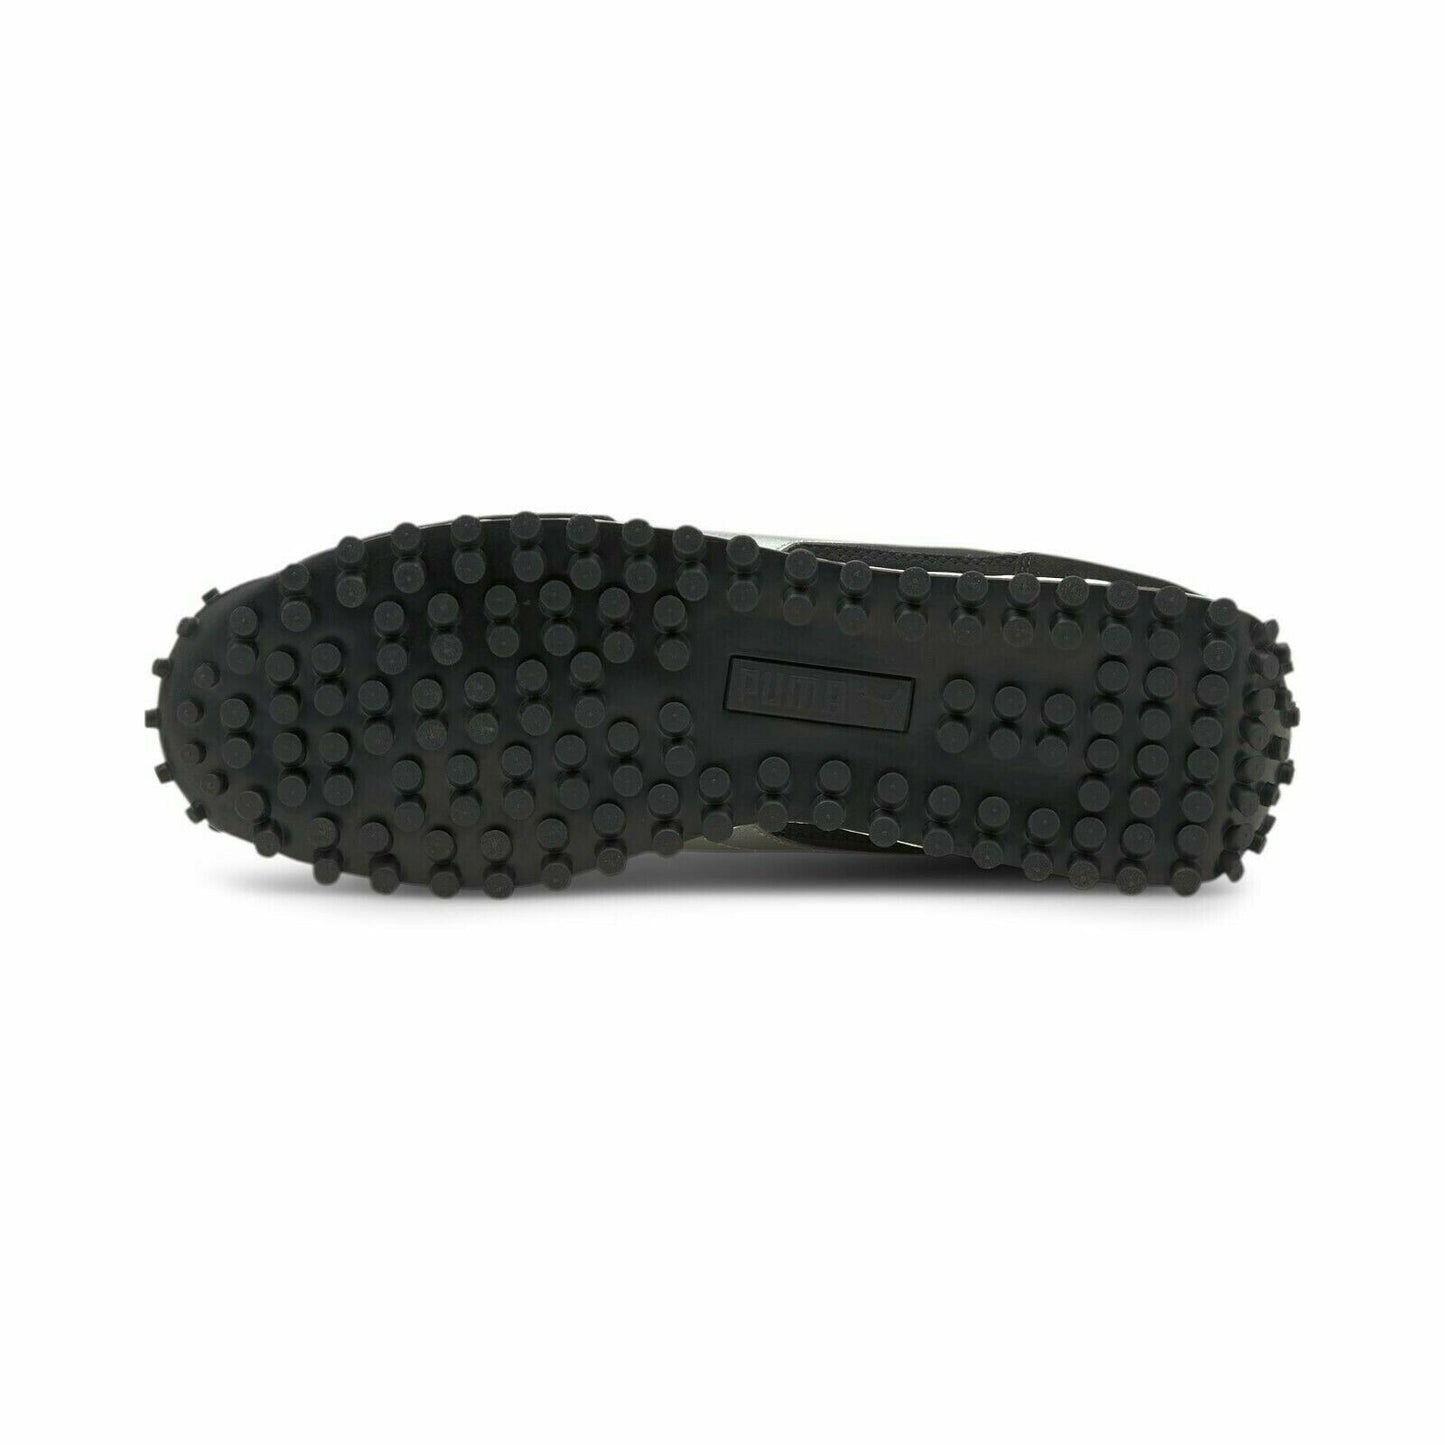 Puma Men's New Easy Rider II Tecno Shoes Sneakers Black Marshmallow 381027-02 Size 11